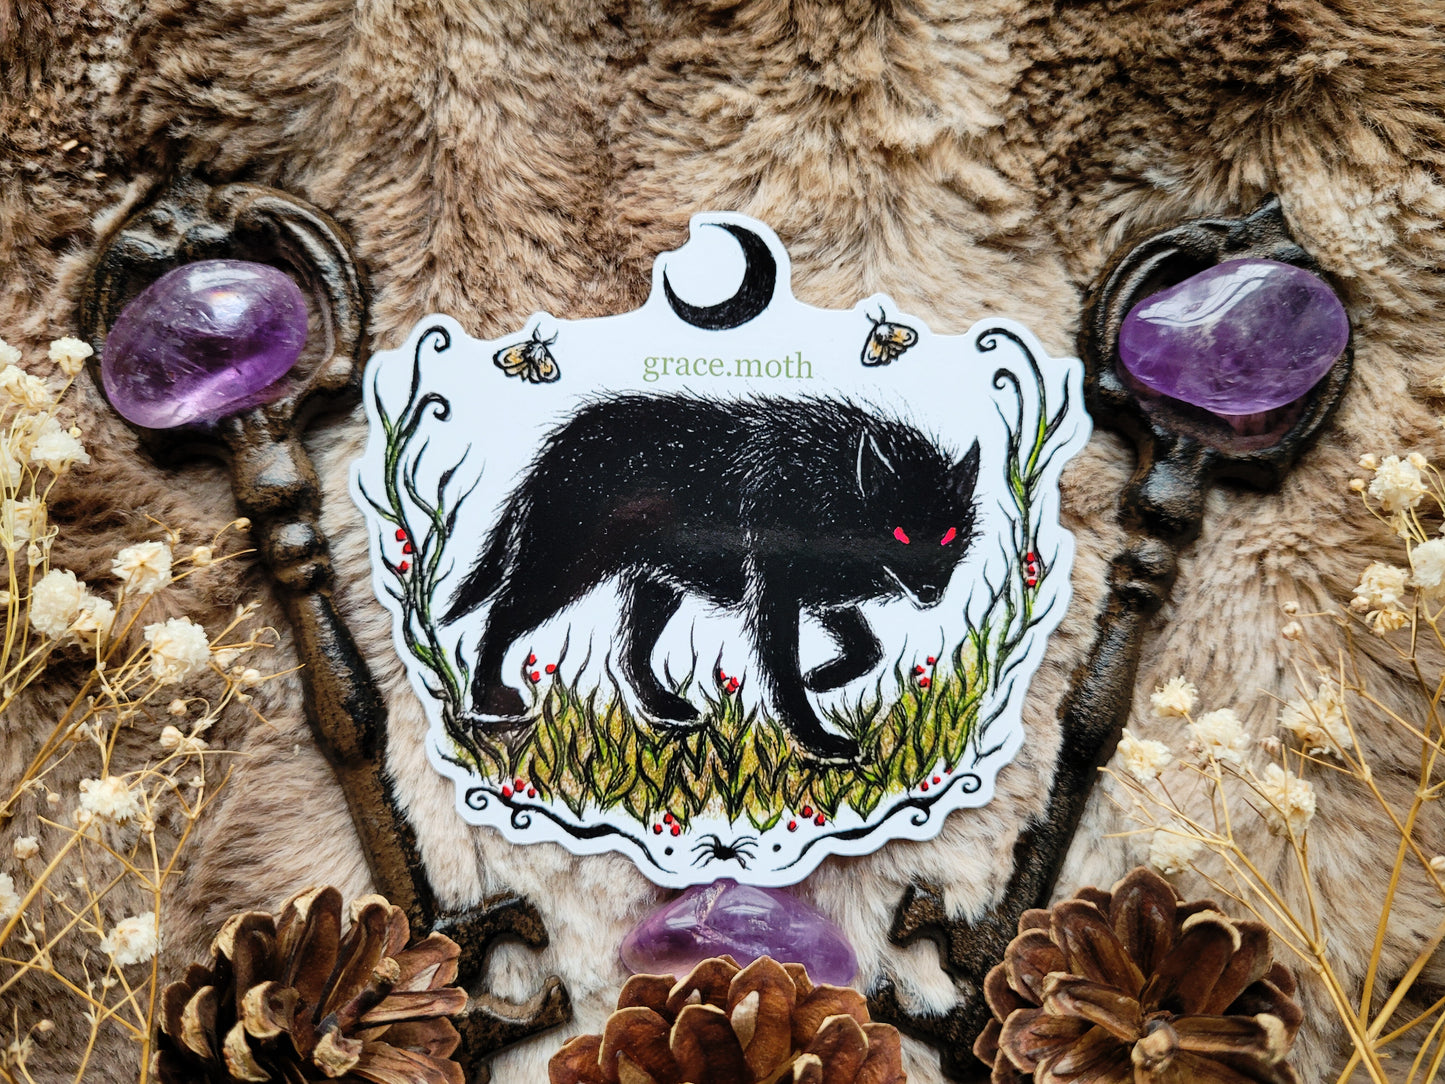 Black dog - Vinyl Sticker 10cm - Black shuck folklore - Witchy - Gothic - Illustrated by Grace moth